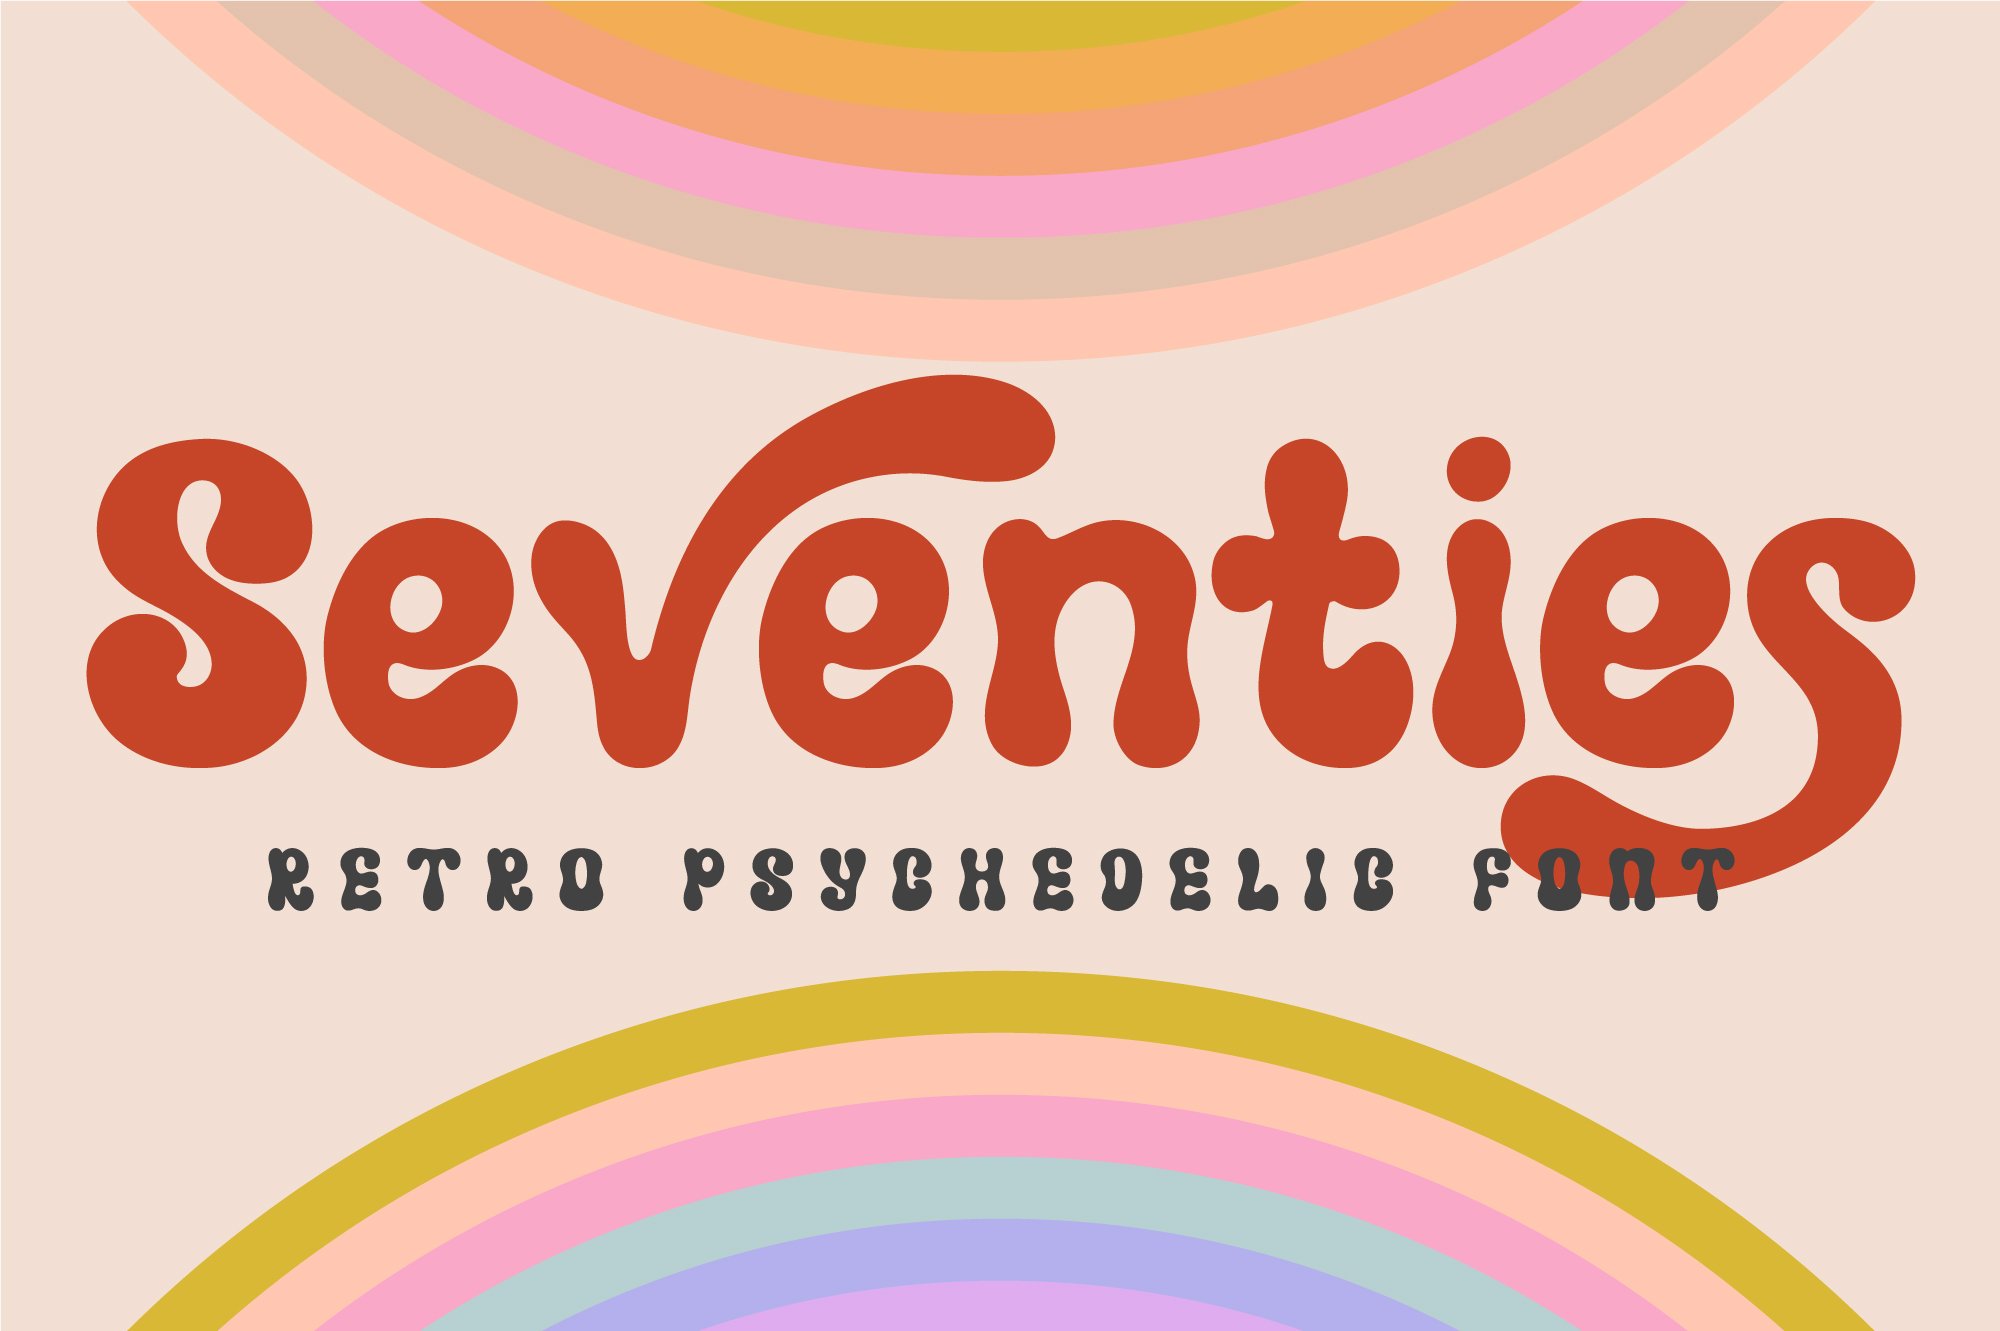 Vintage Psychedelic Font cover image.